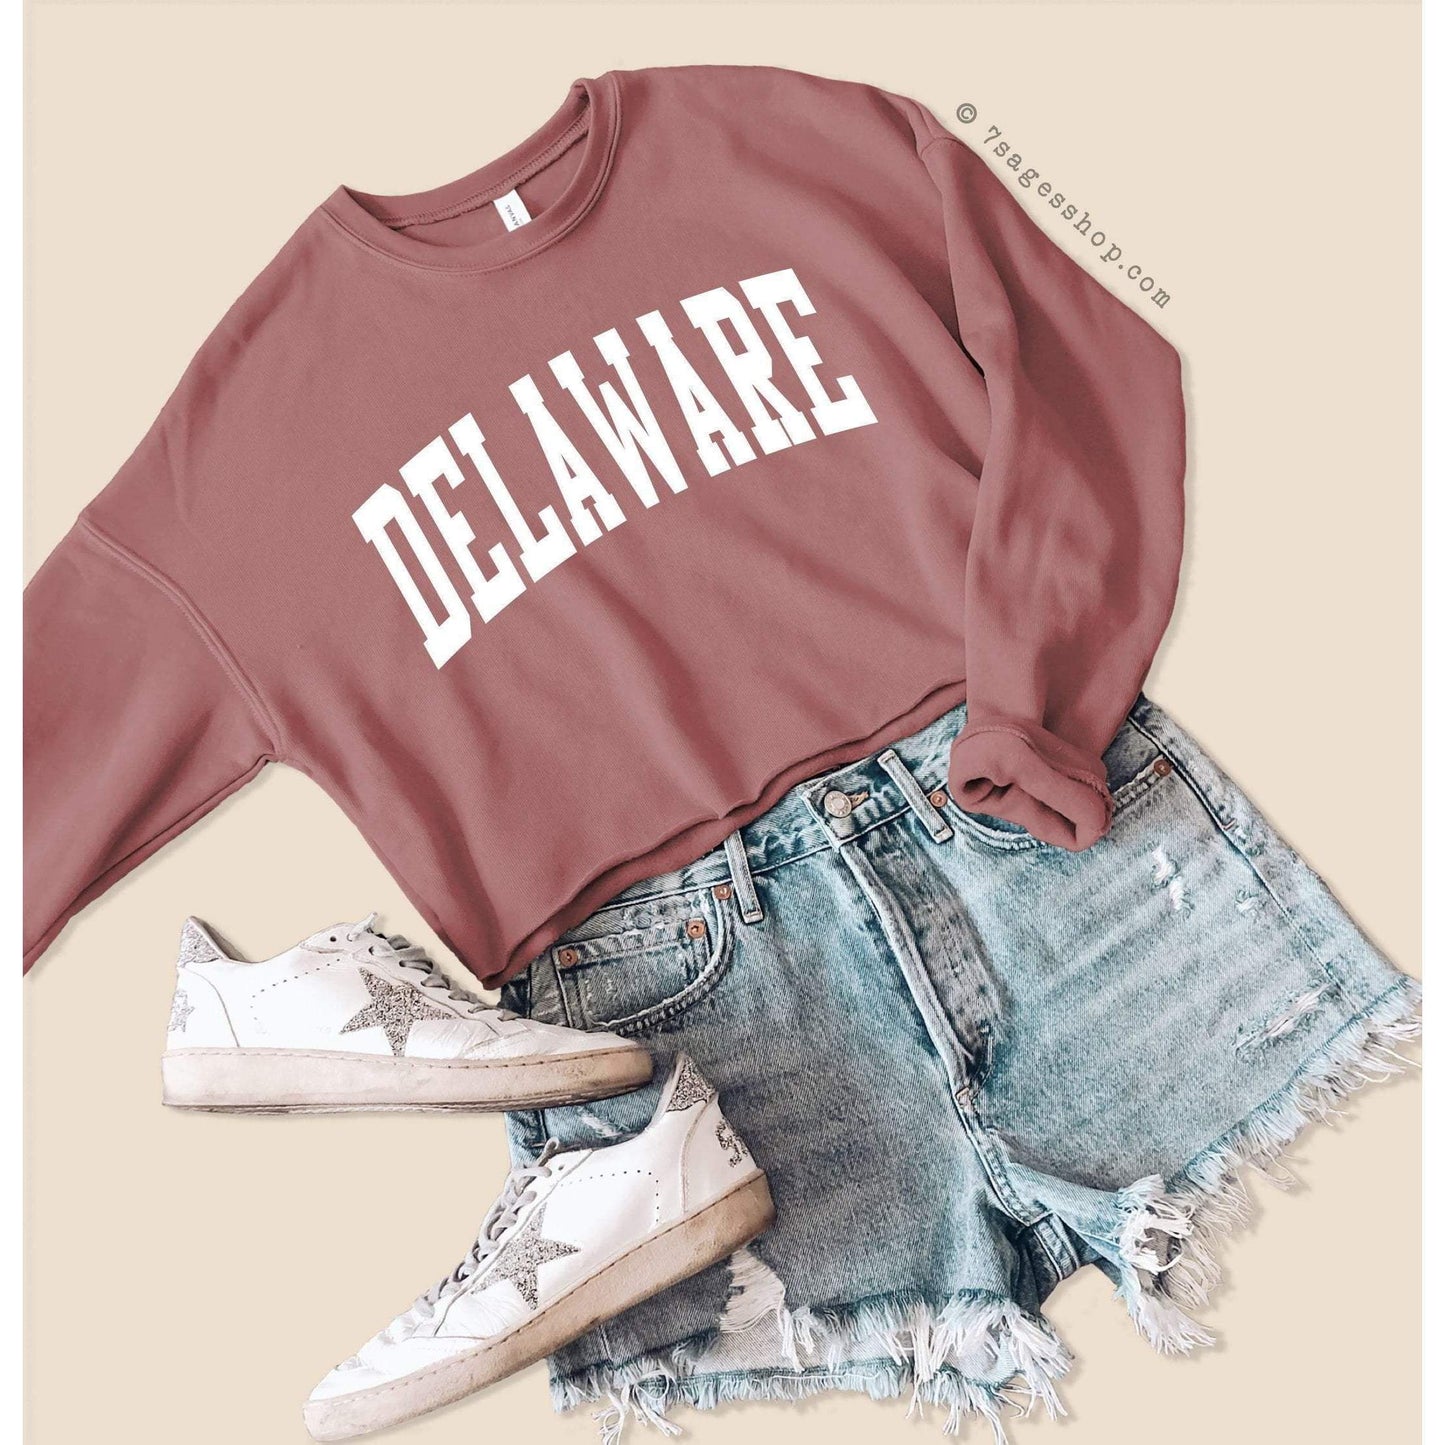 Delaware Sweatshirt - Delaware Cropped Sweatshirt - Delaware Shirts - University of Delaware Crop Top - Fleece Sweatshirt